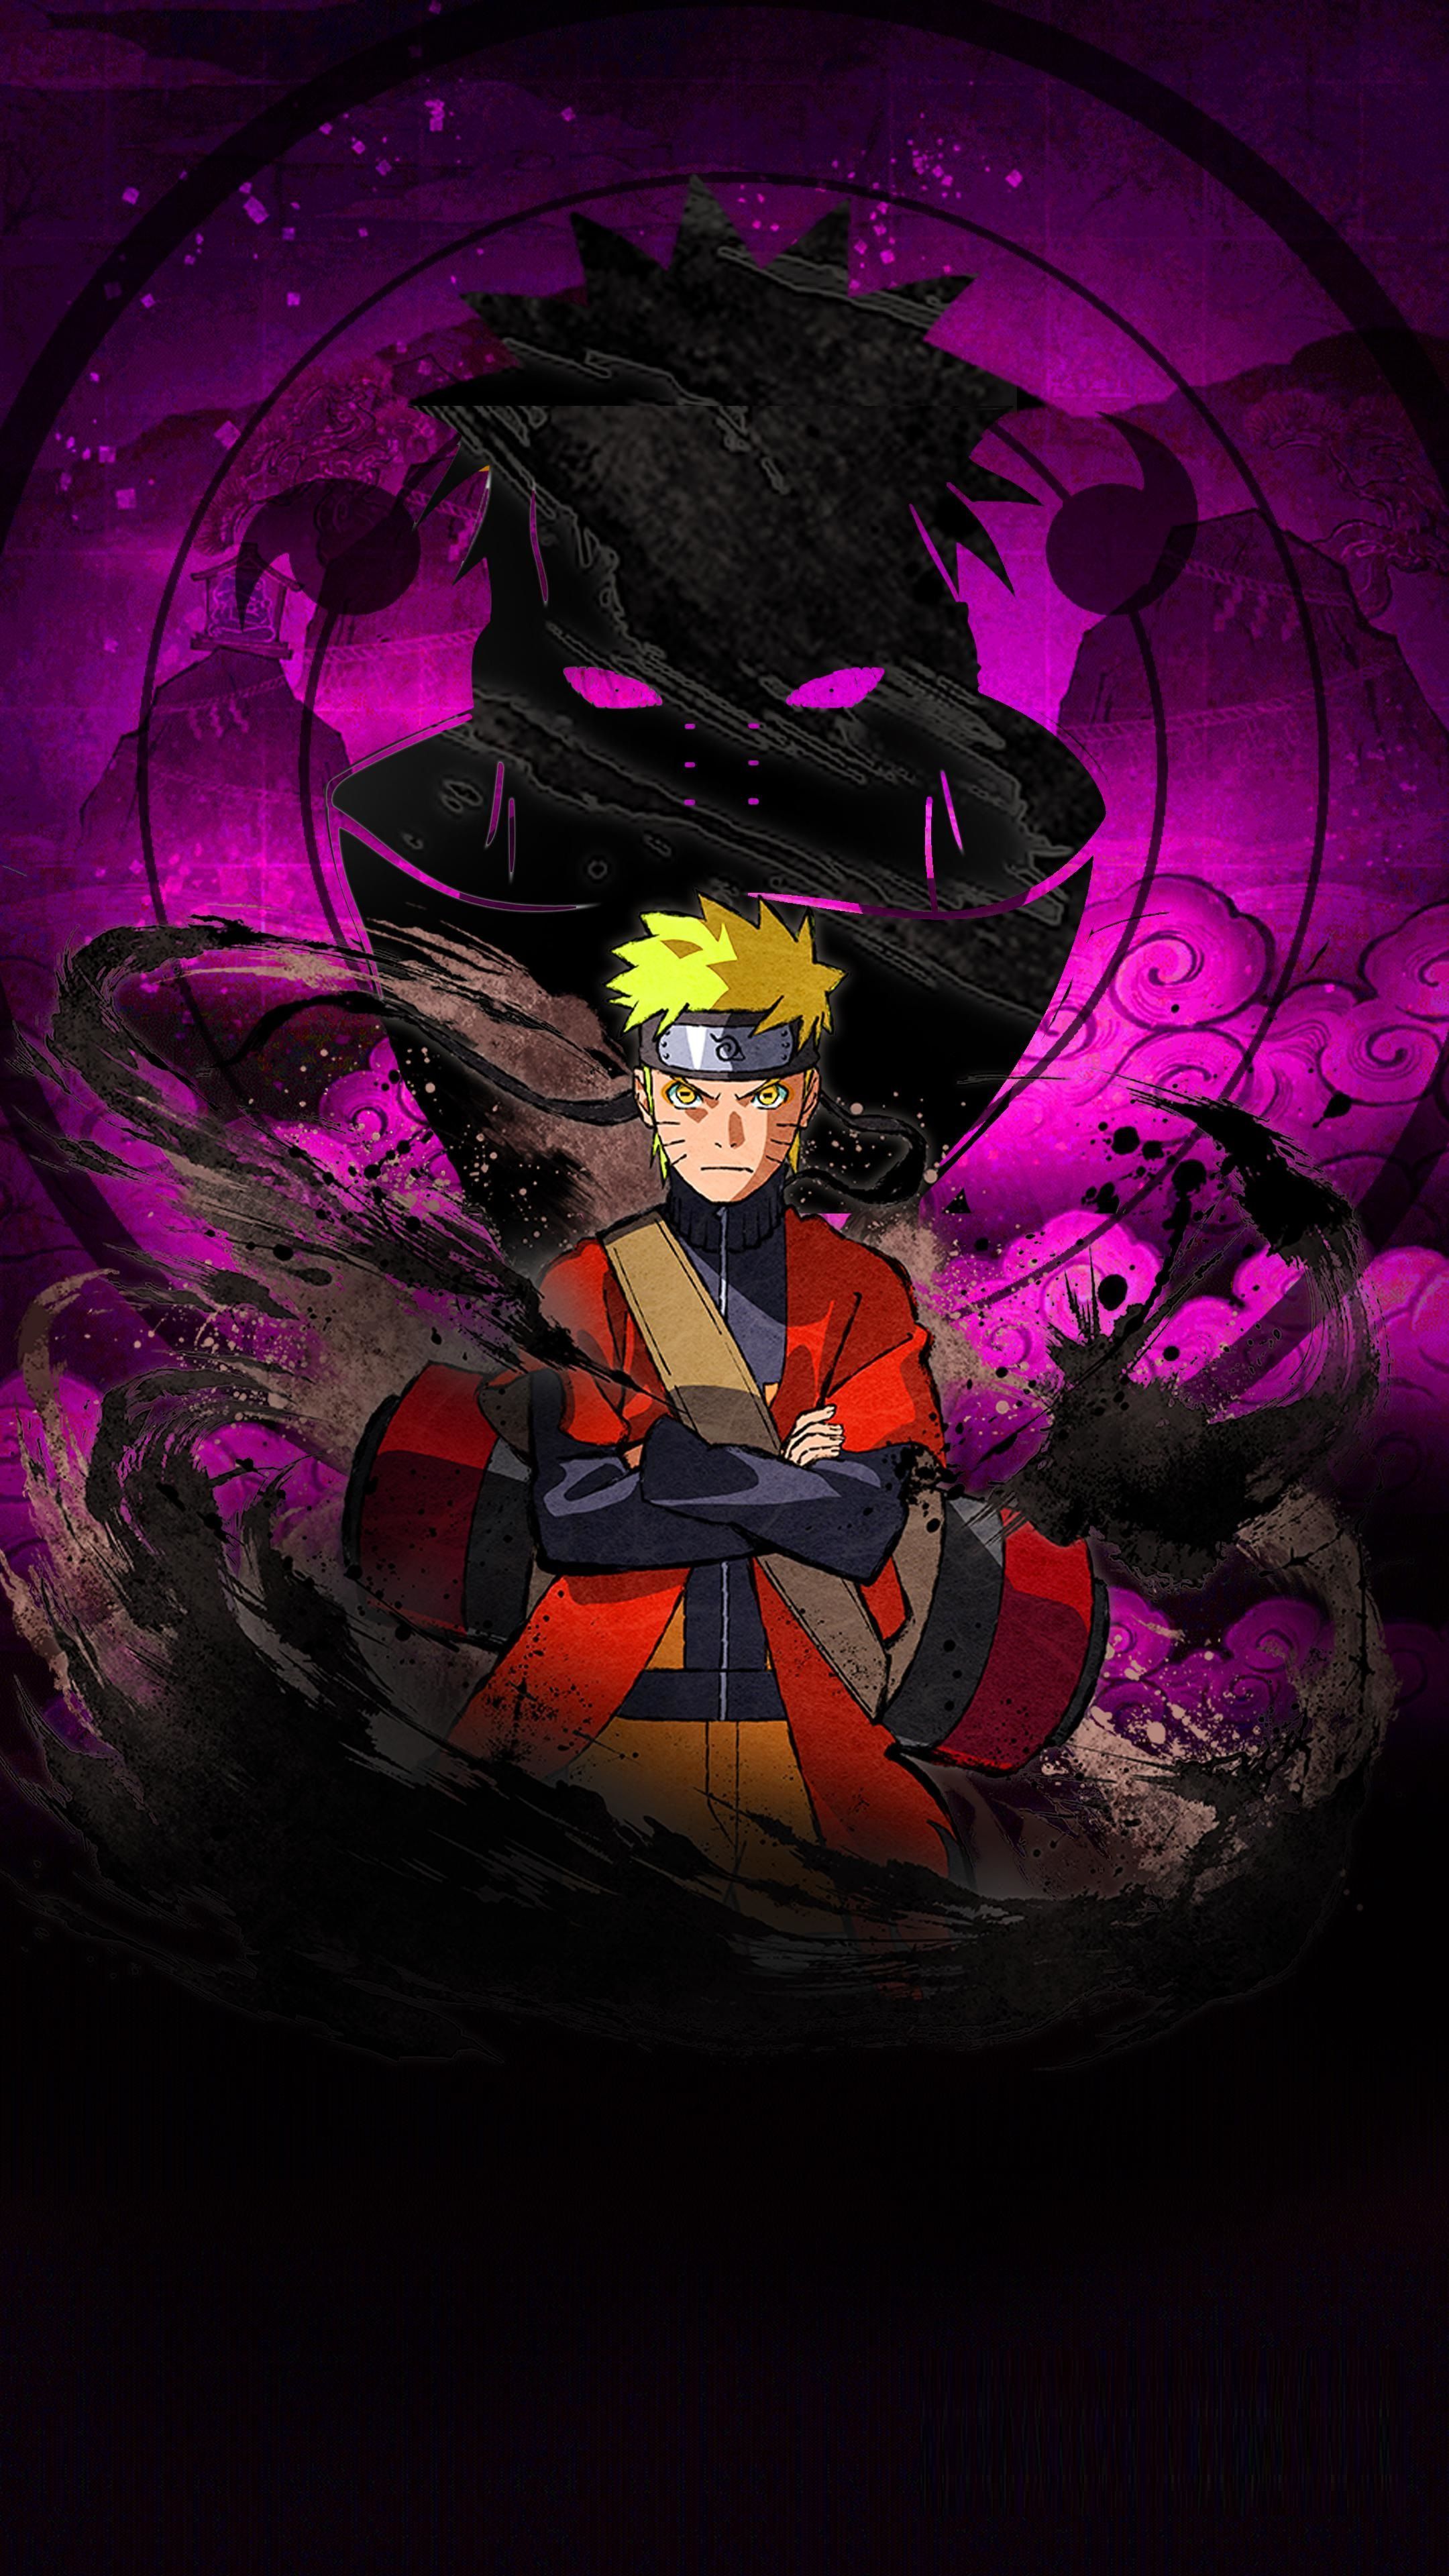 Dark Naruto Wallpaper,HD Anime Wallpapers,4k Wallpapers,Images